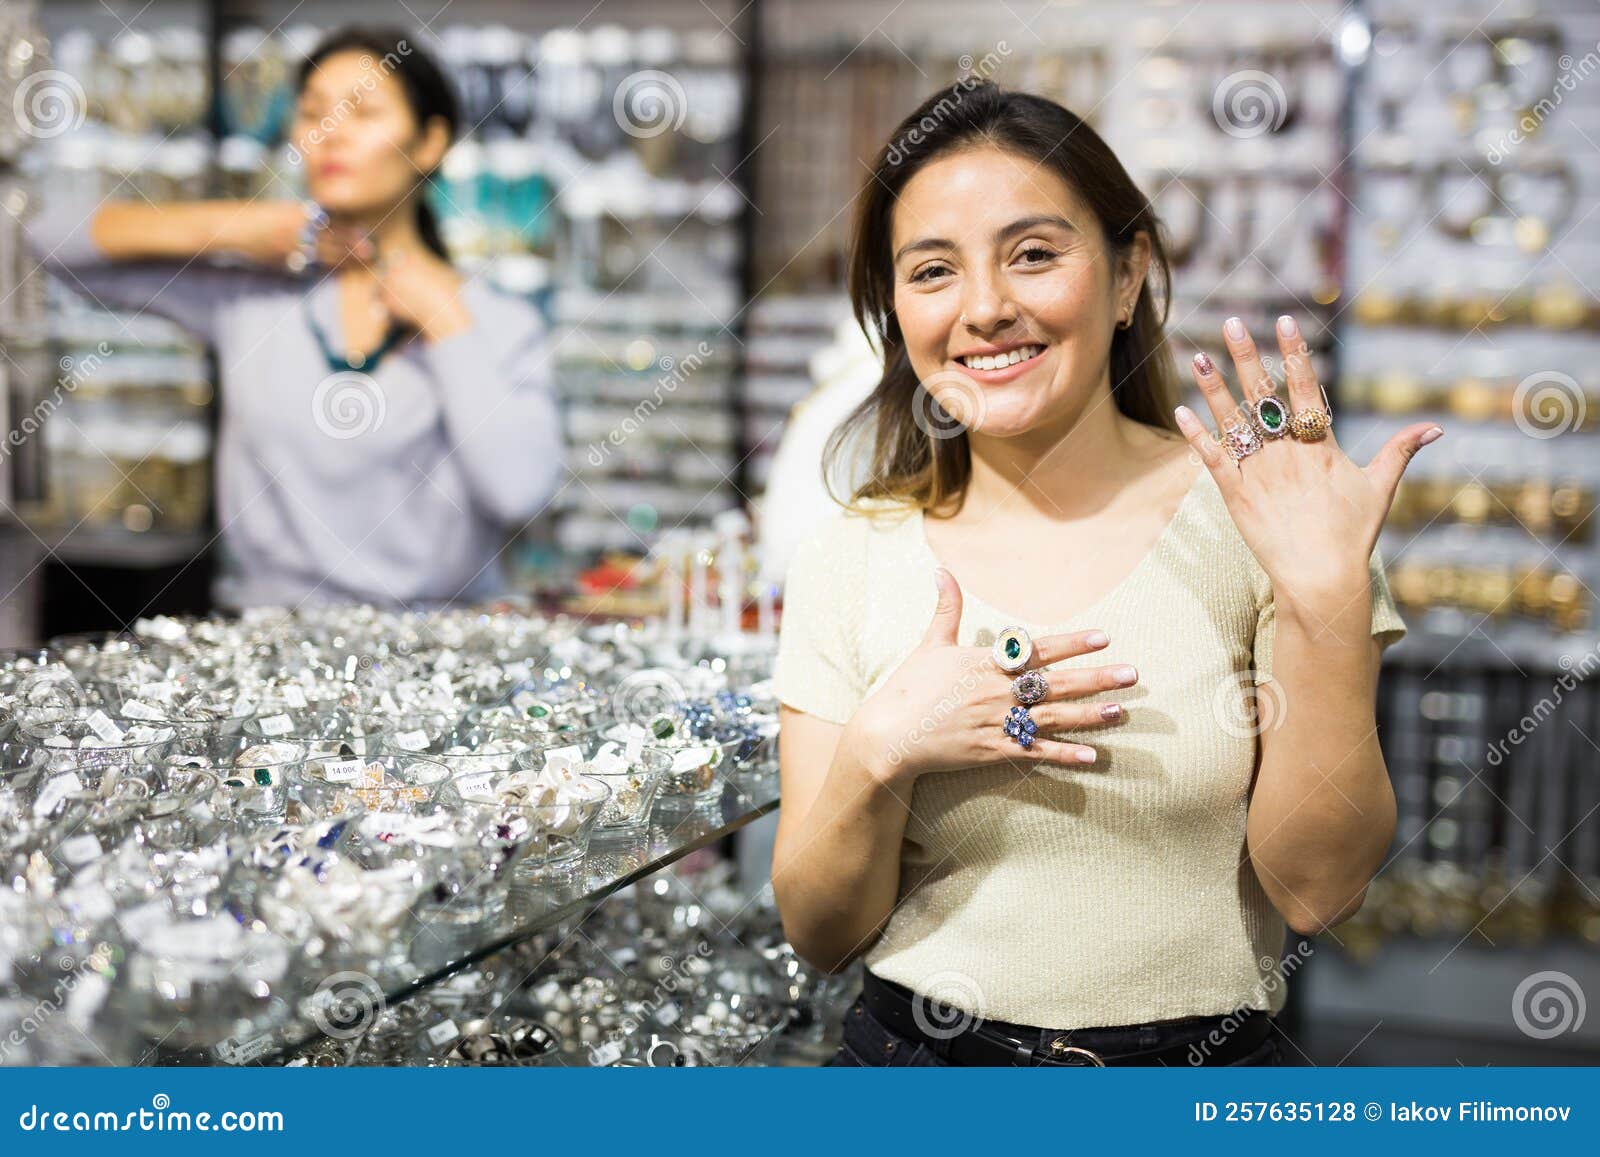 Cheerful Hispanic Girl Showing Rings on Fingers in Jewelry Showroom ...